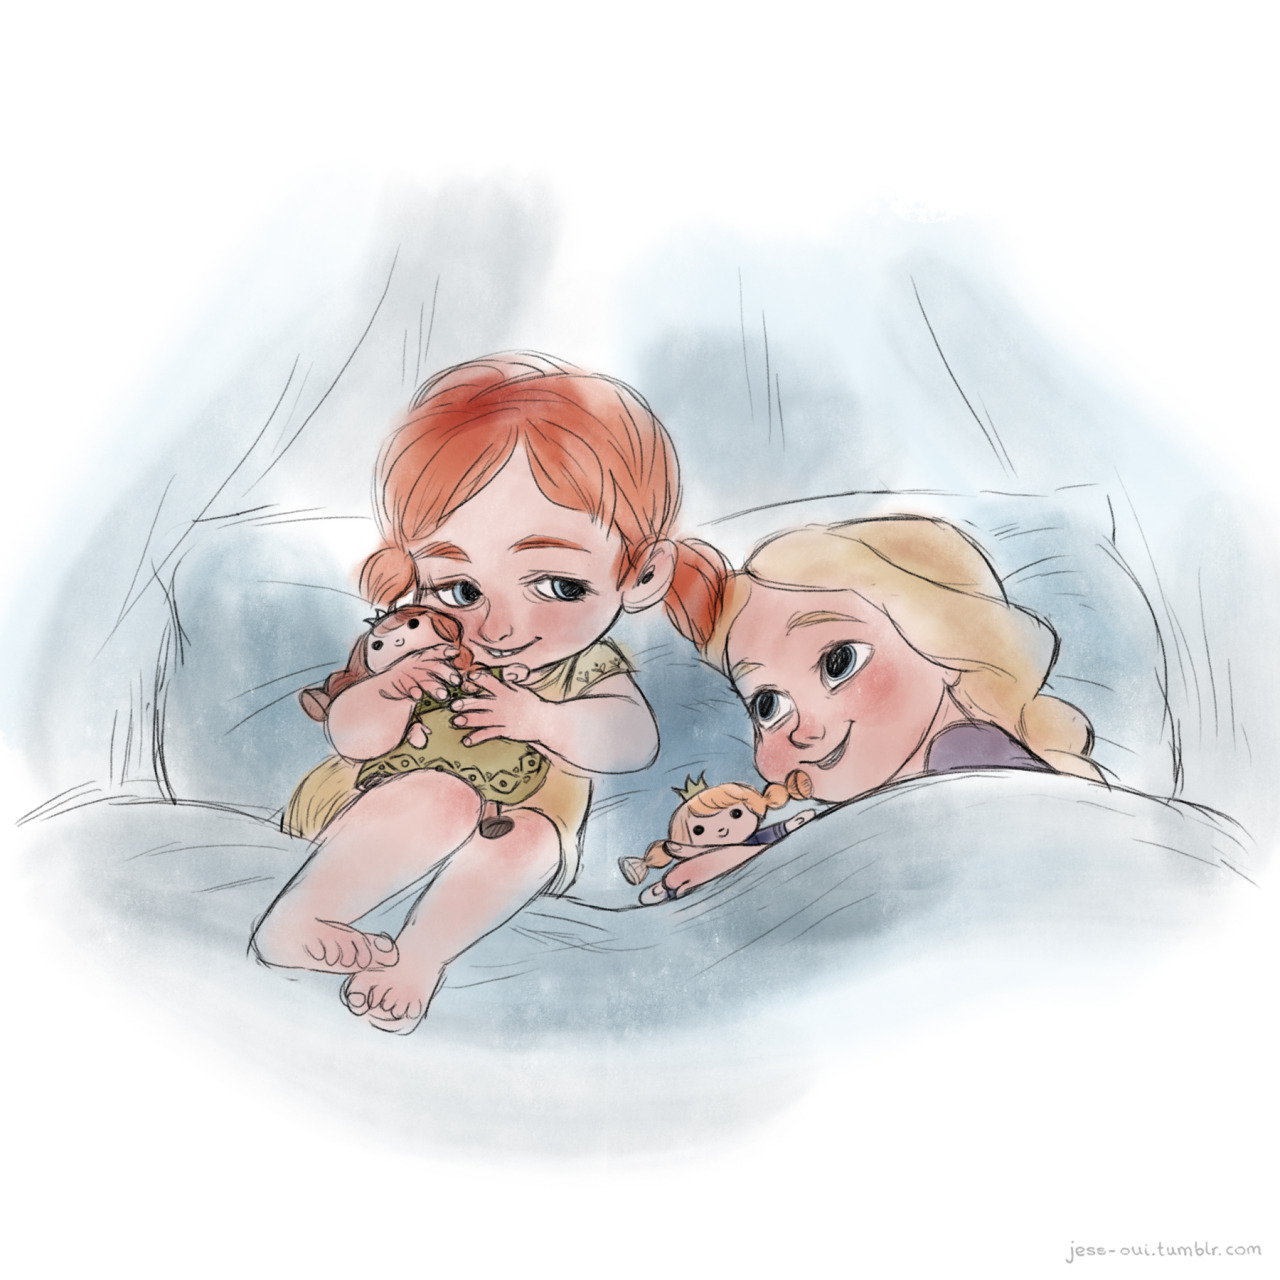 Les personnages Frozen... Enfant! - Page 3 Tumblr_ngc8ibcfbG1rzx0pqo1_1280